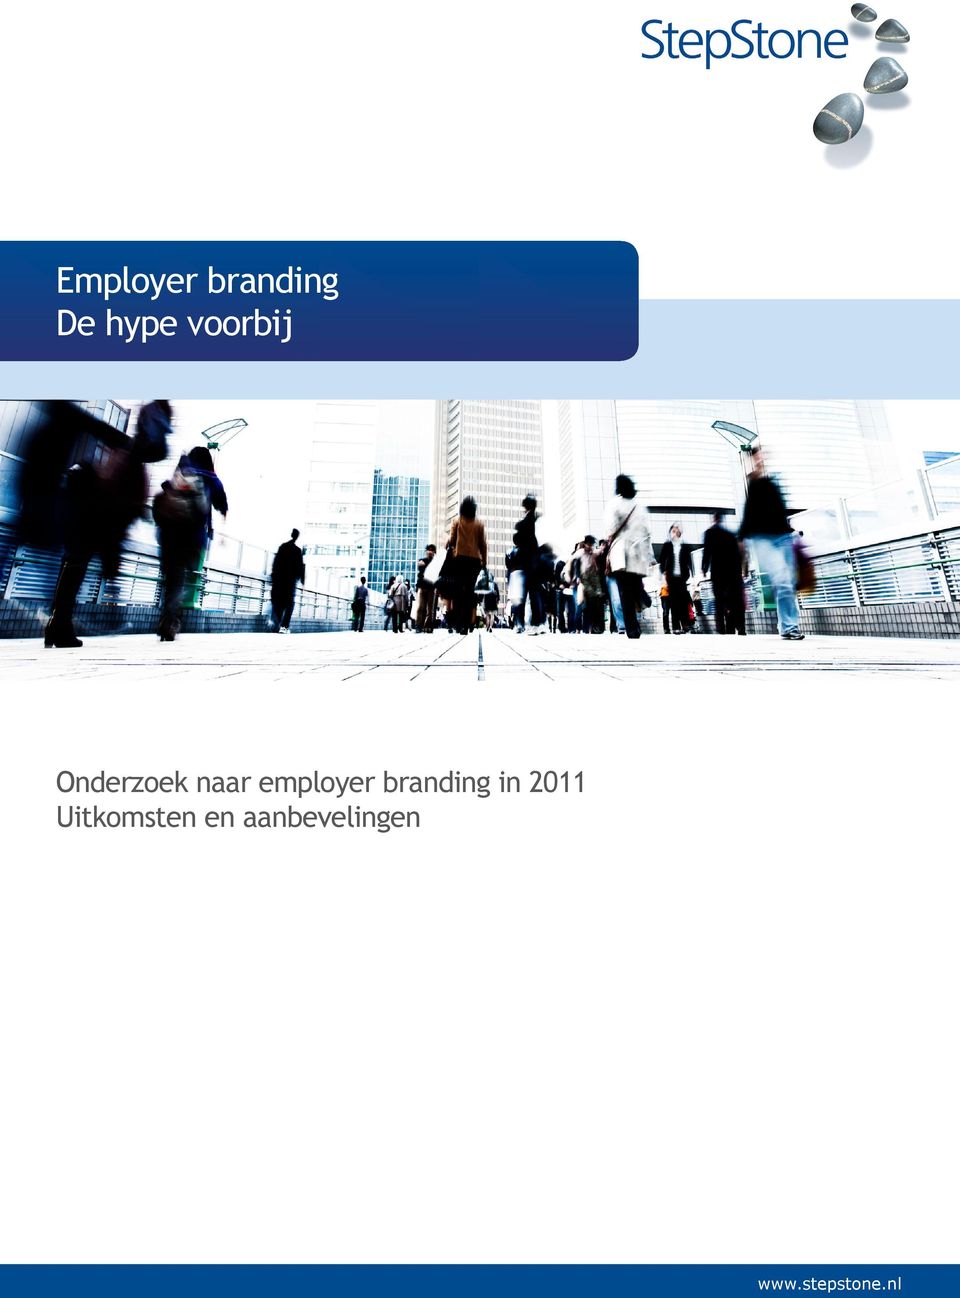 employer branding in 2011